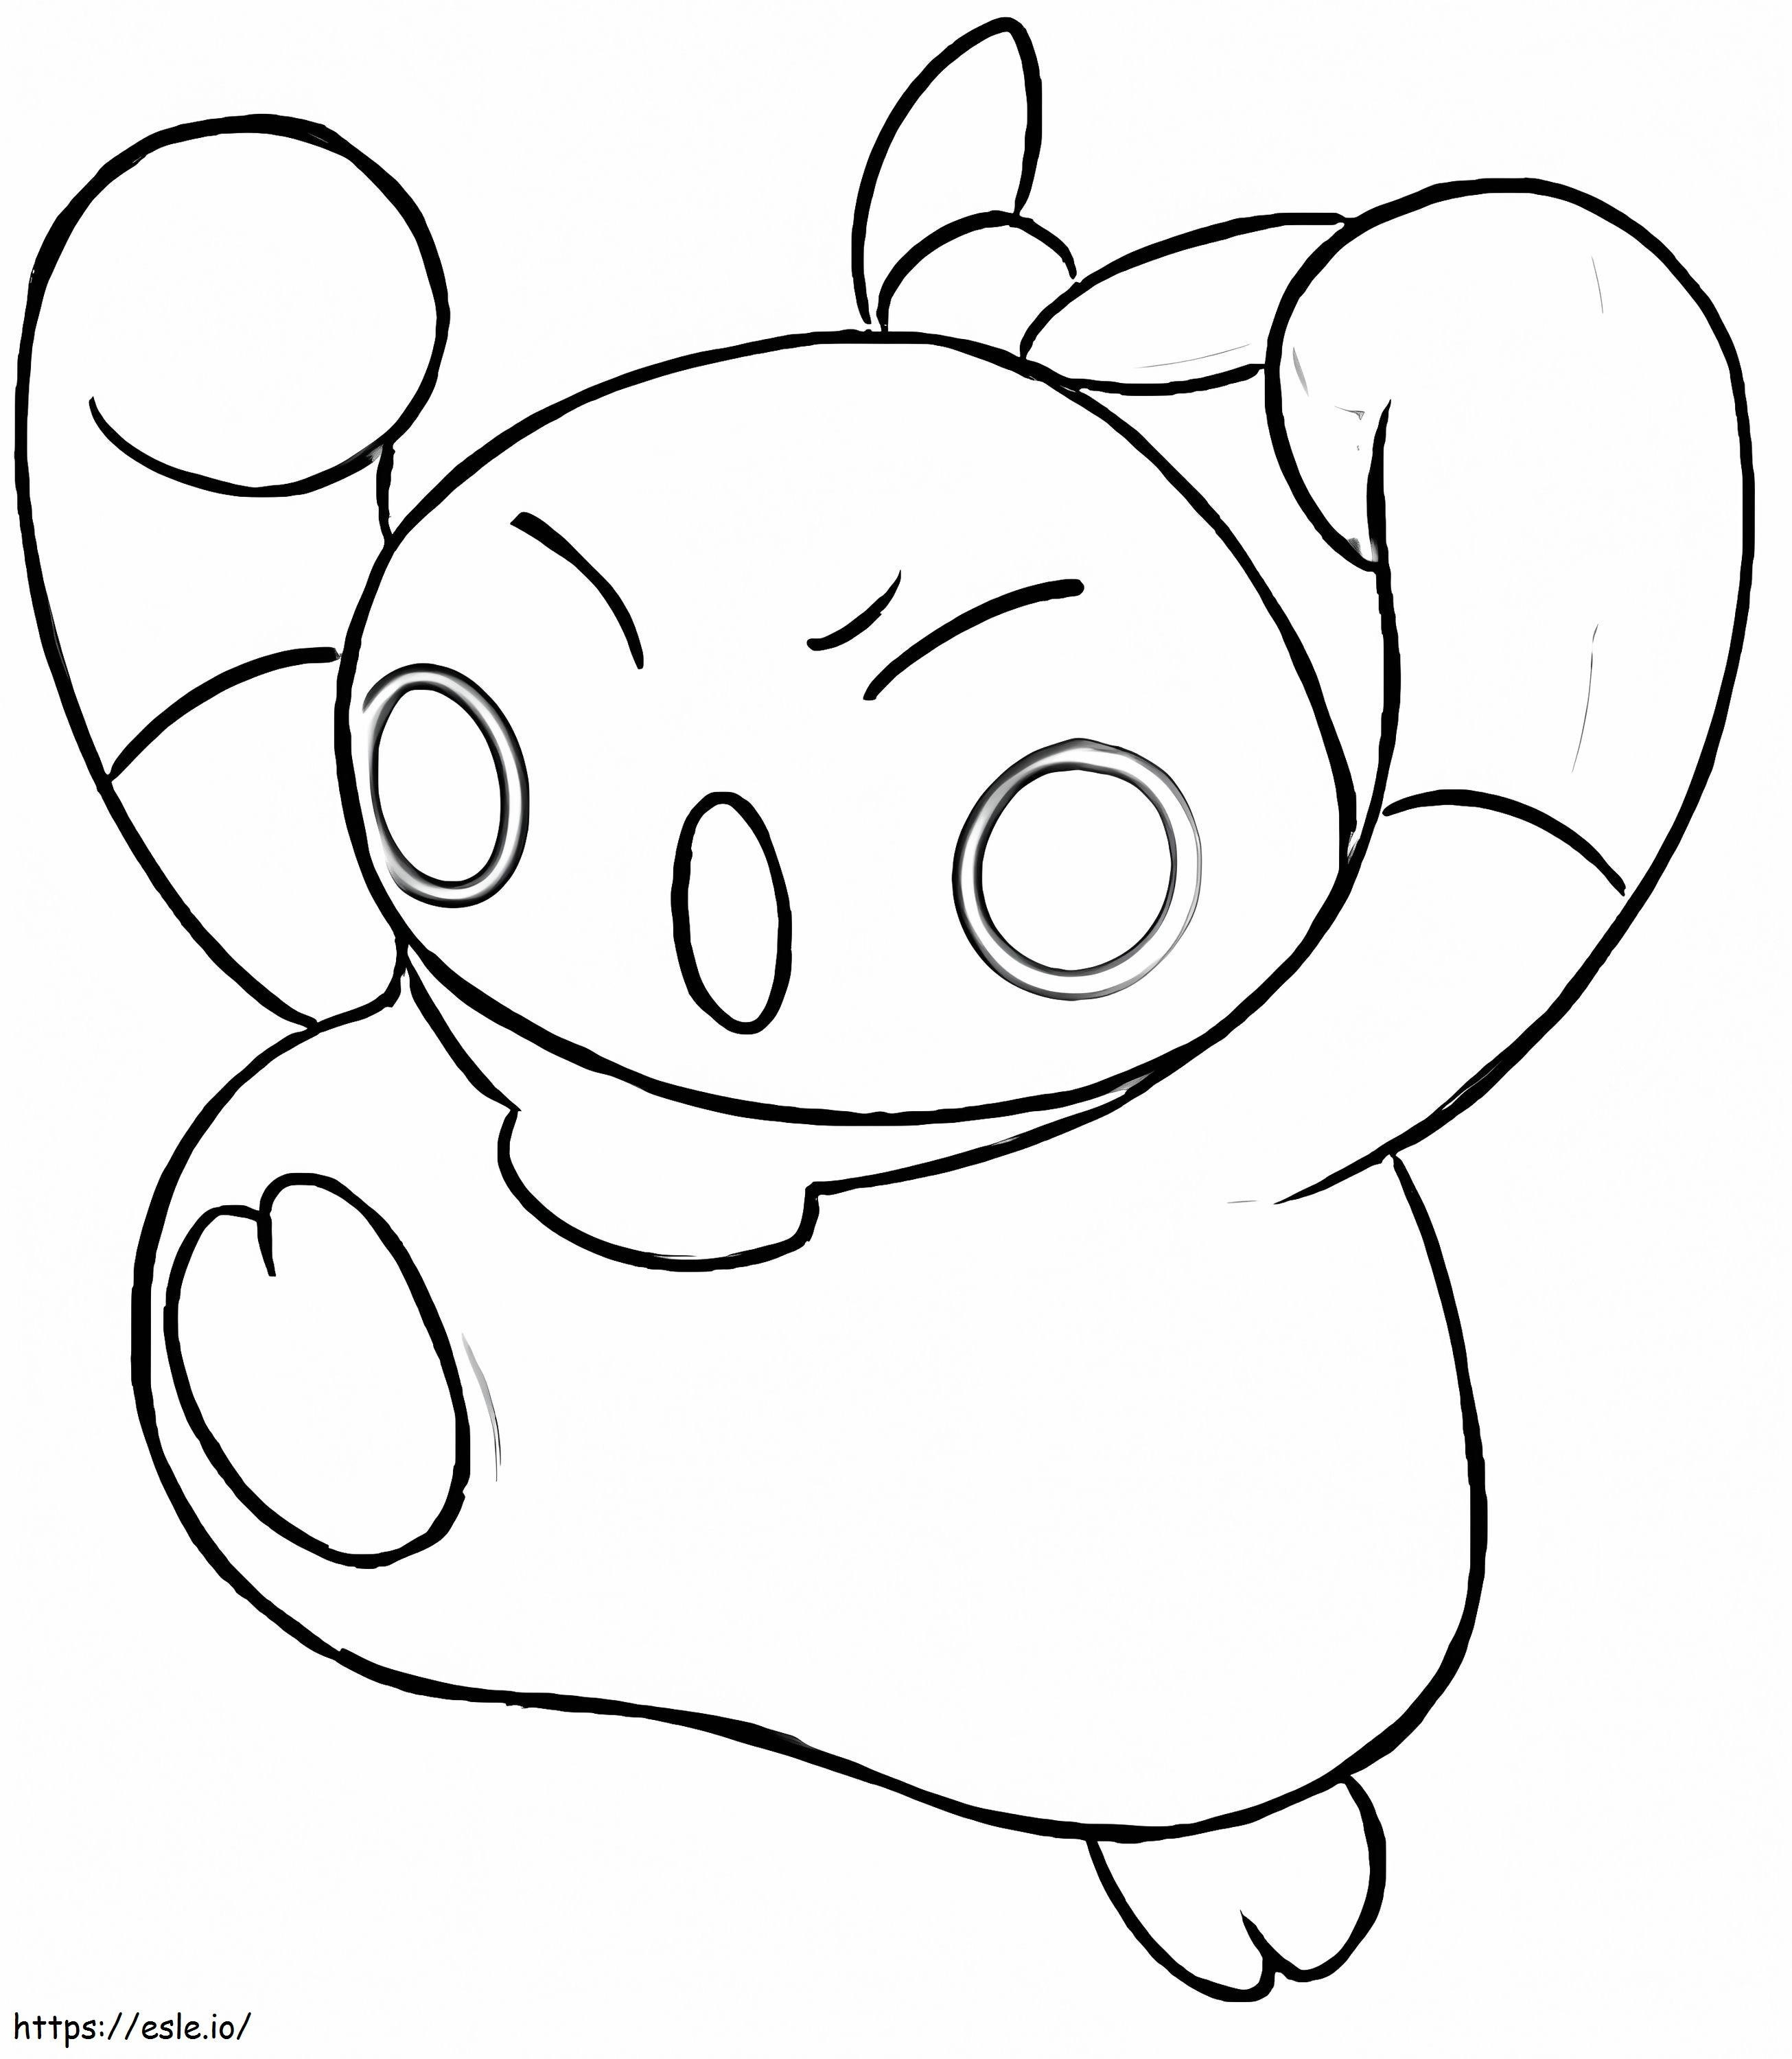 Coloriage Pokémon Makuhita gratuit à imprimer dessin